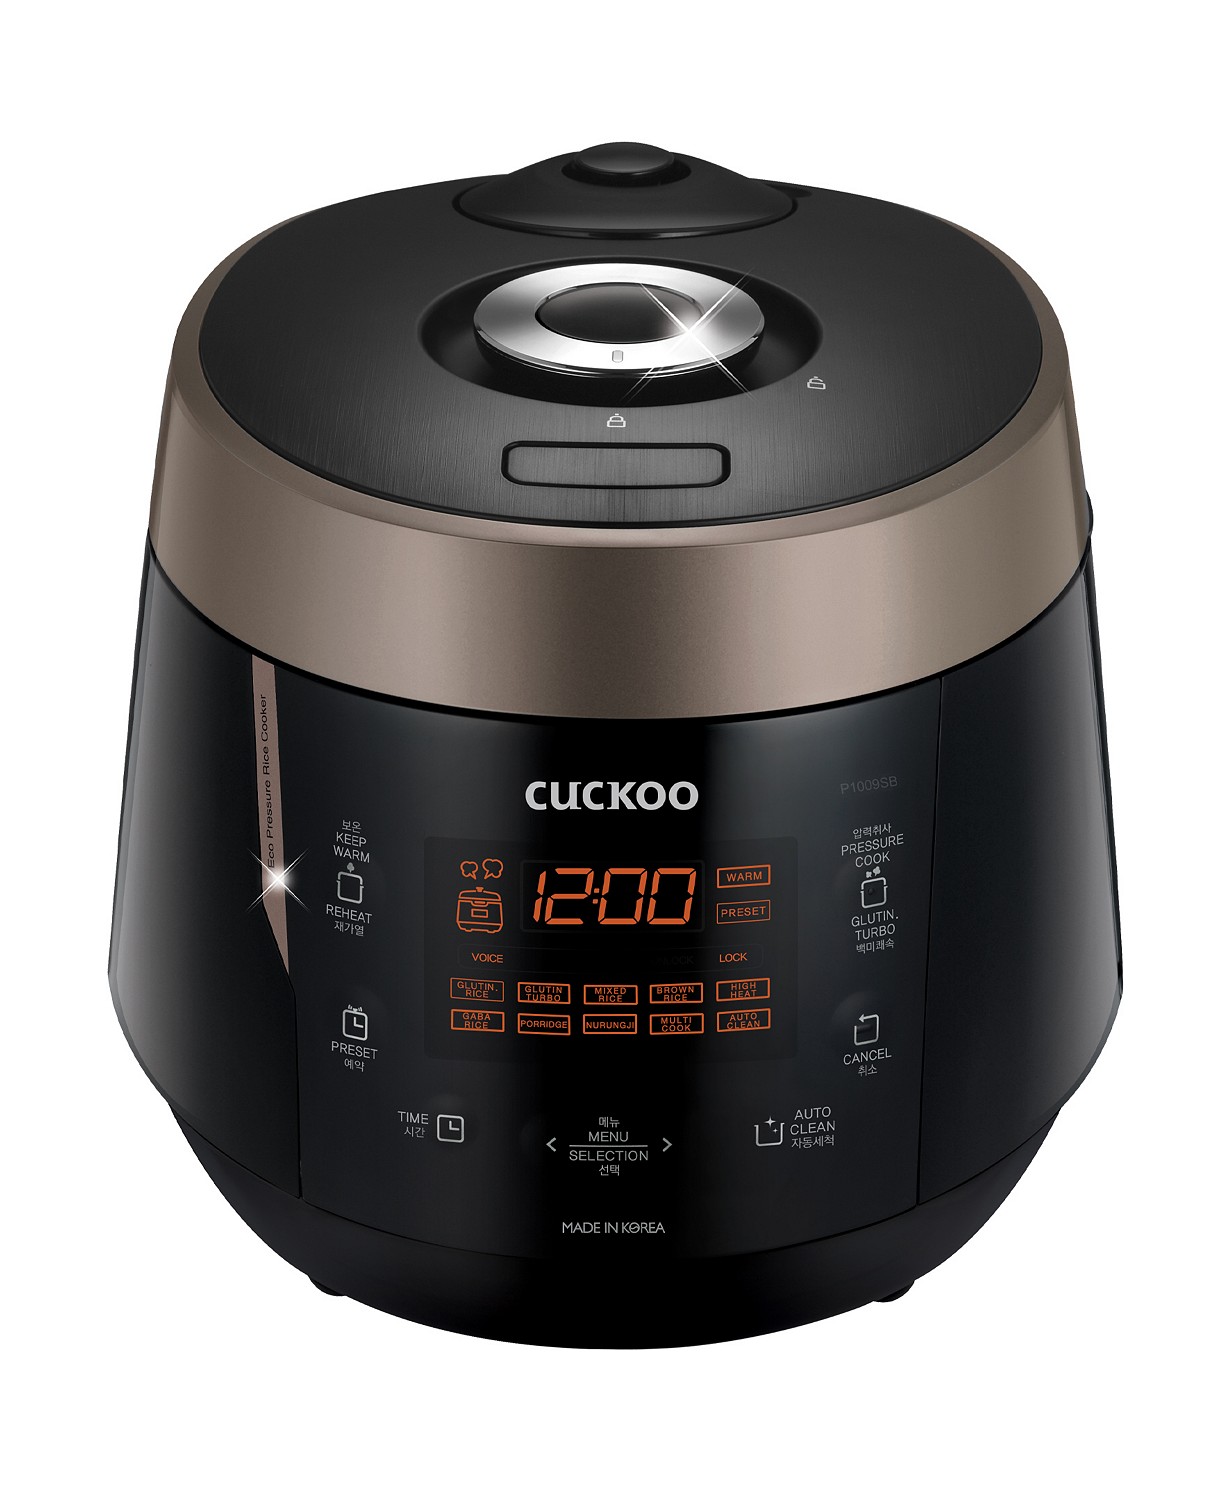 Cuckoo 10-Cup HP Pressure Rice Cooker $279 @ Macys.com; FS $279.99